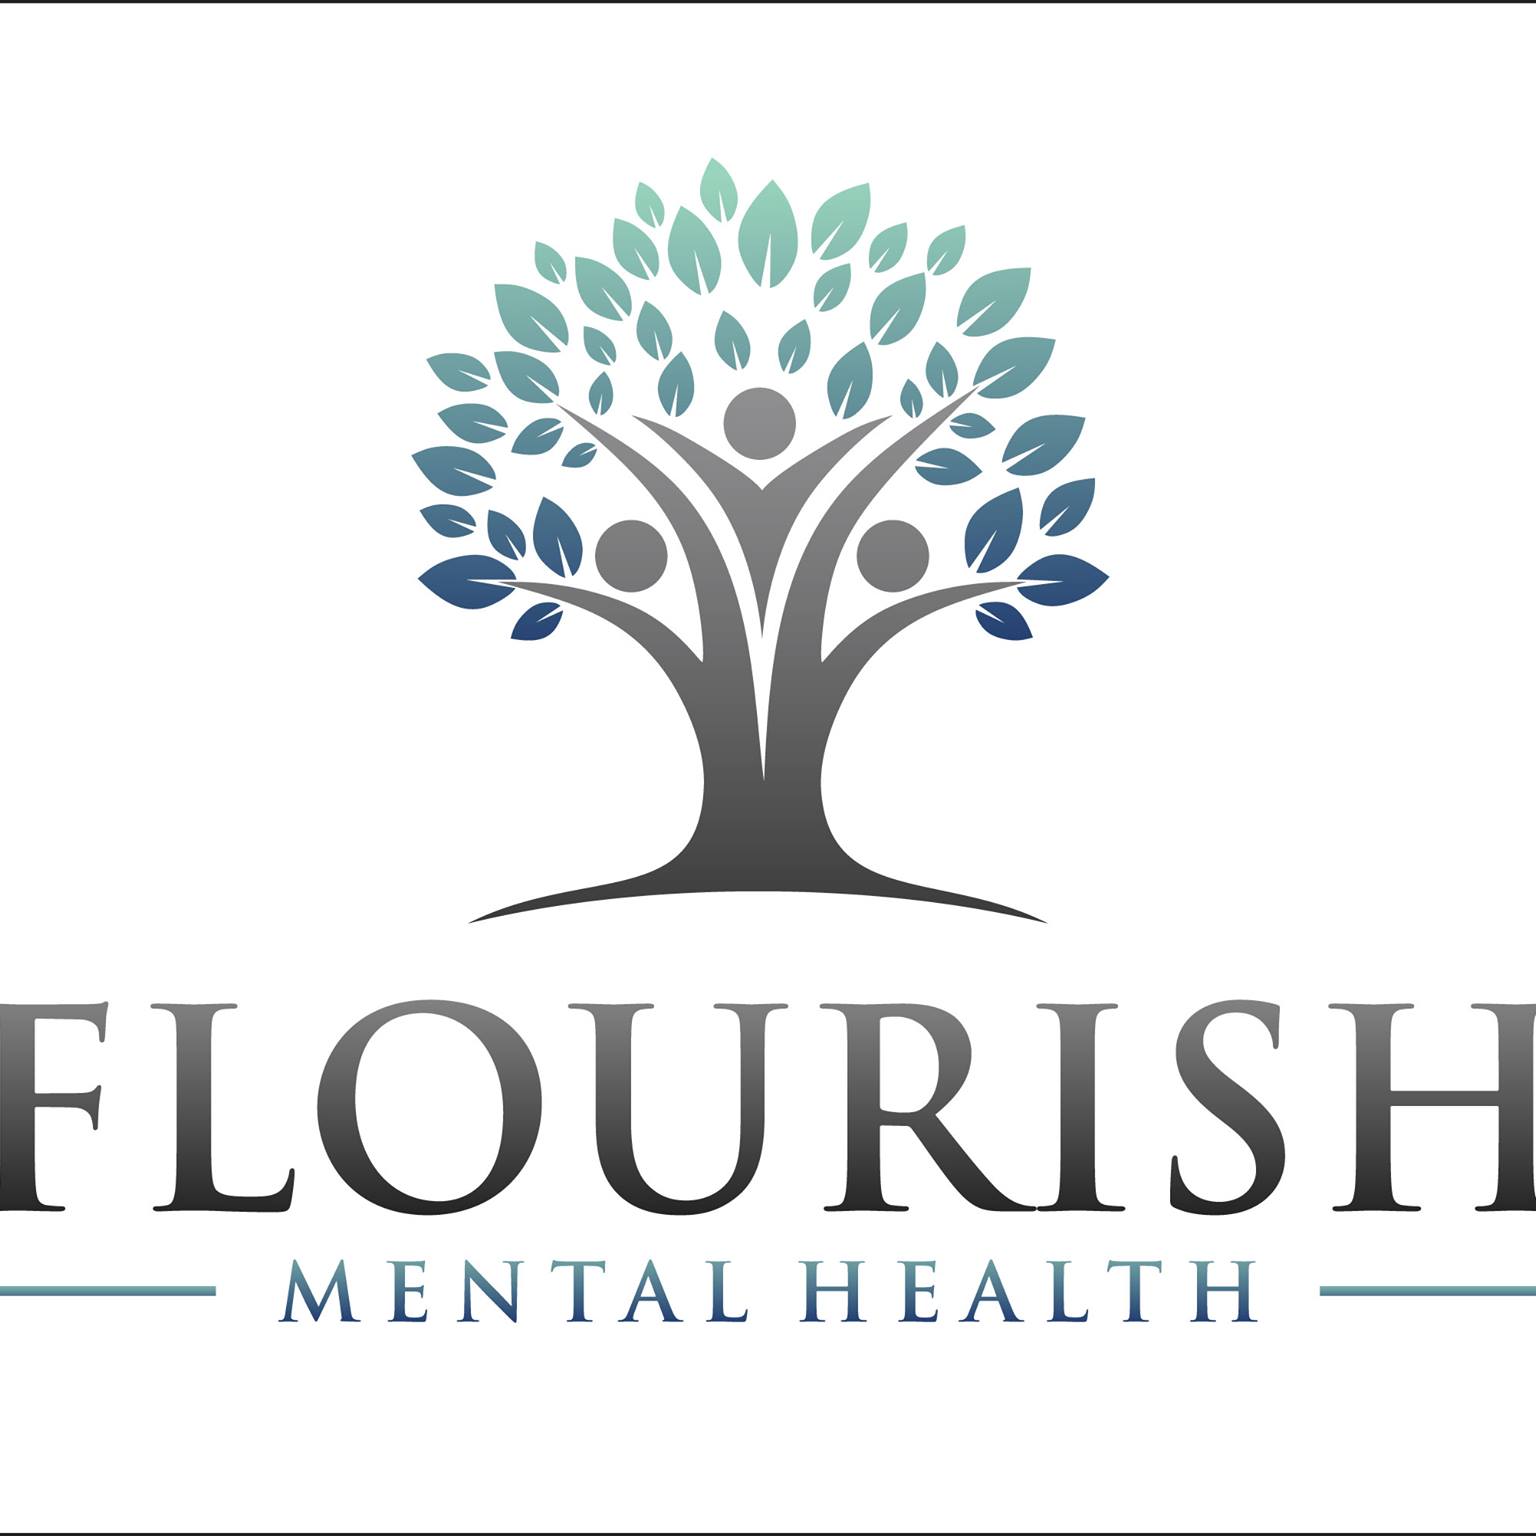 Flourish Mental Health